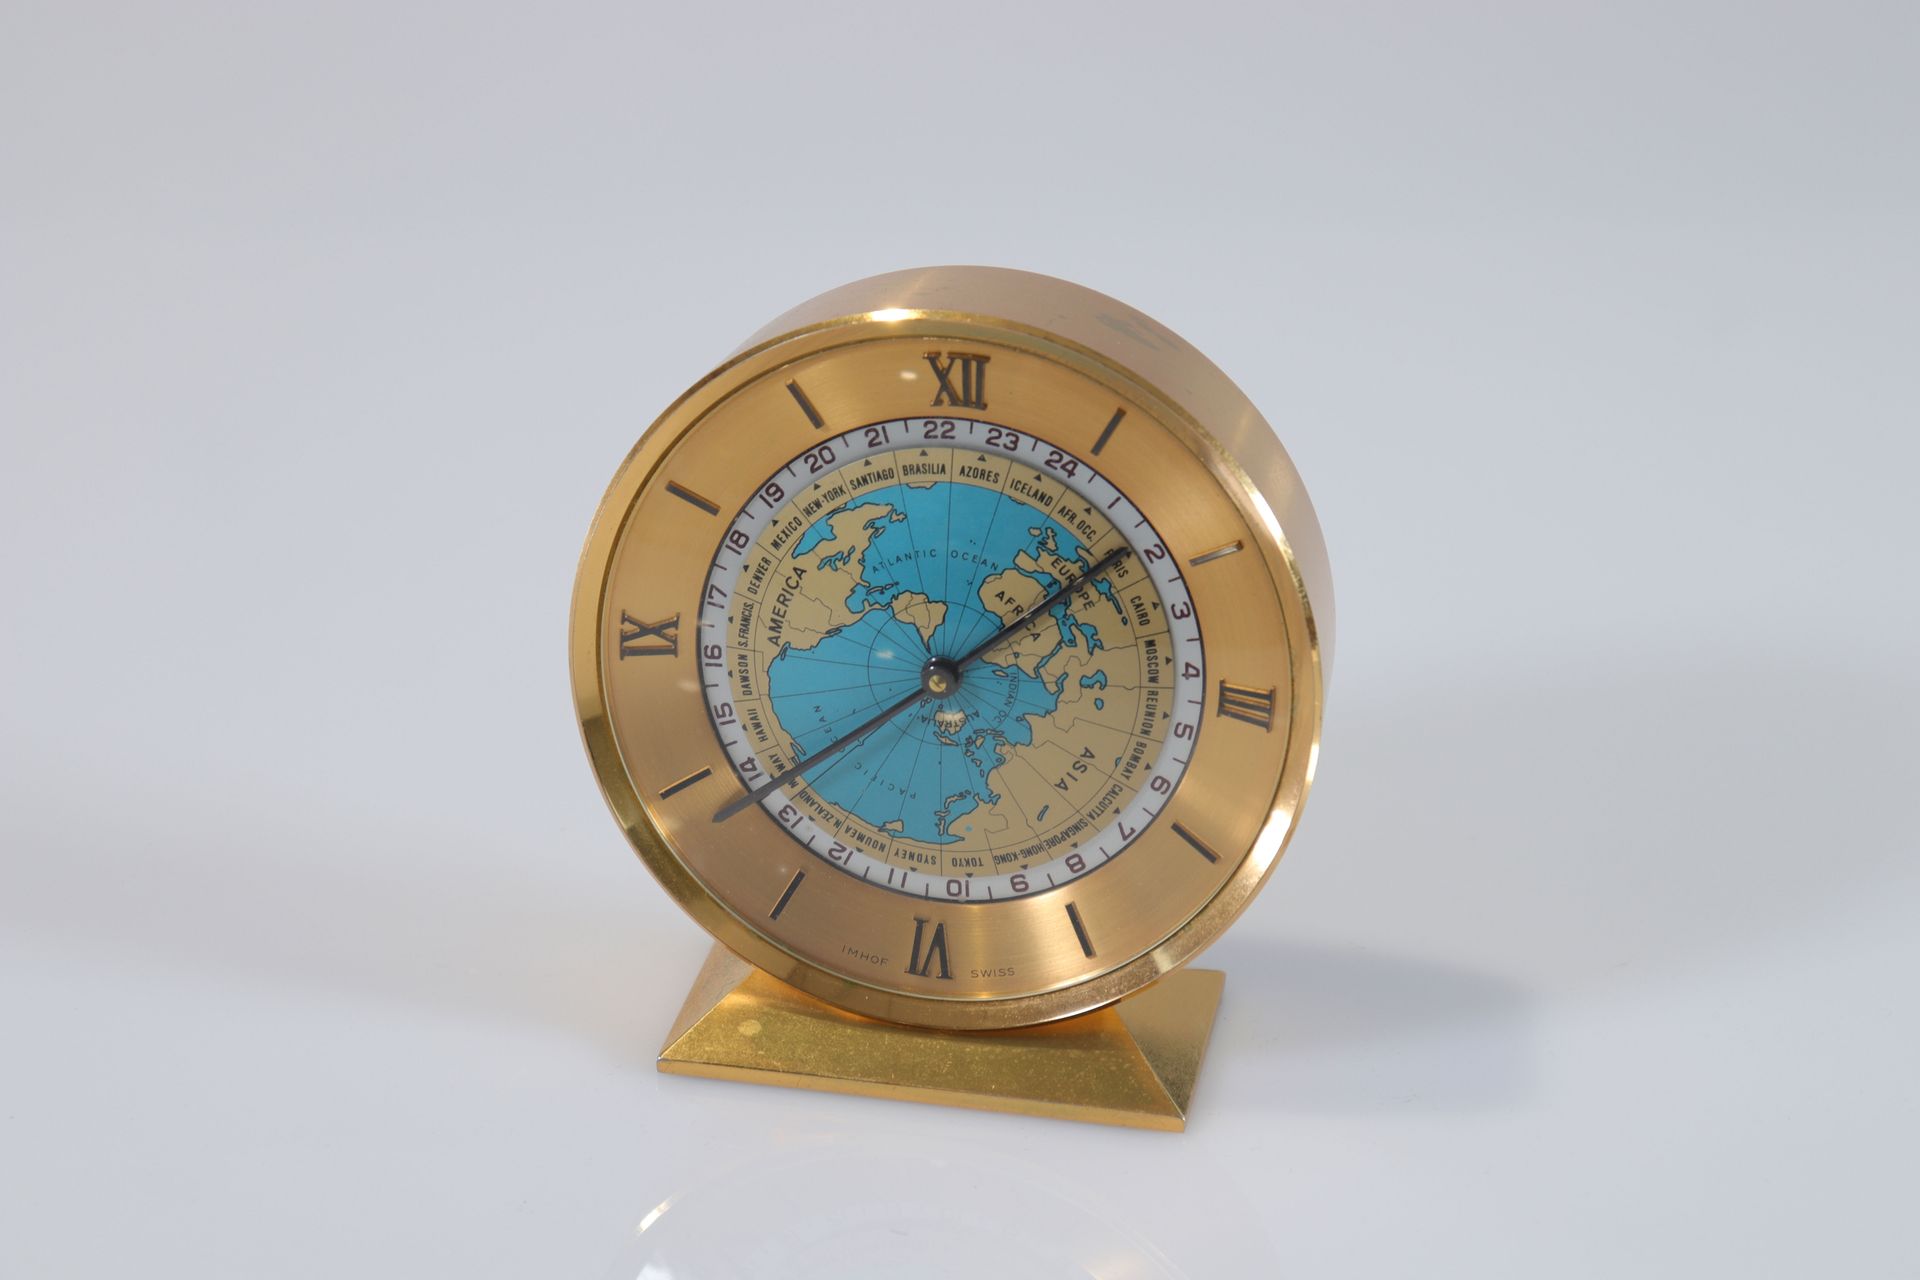 Suisse - Horloge Imhoff - 1960 瑞士 - Imhoff时钟 - 1960
时期: 20
尺寸: 高125毫米，长30毫米
重量(千&hellip;